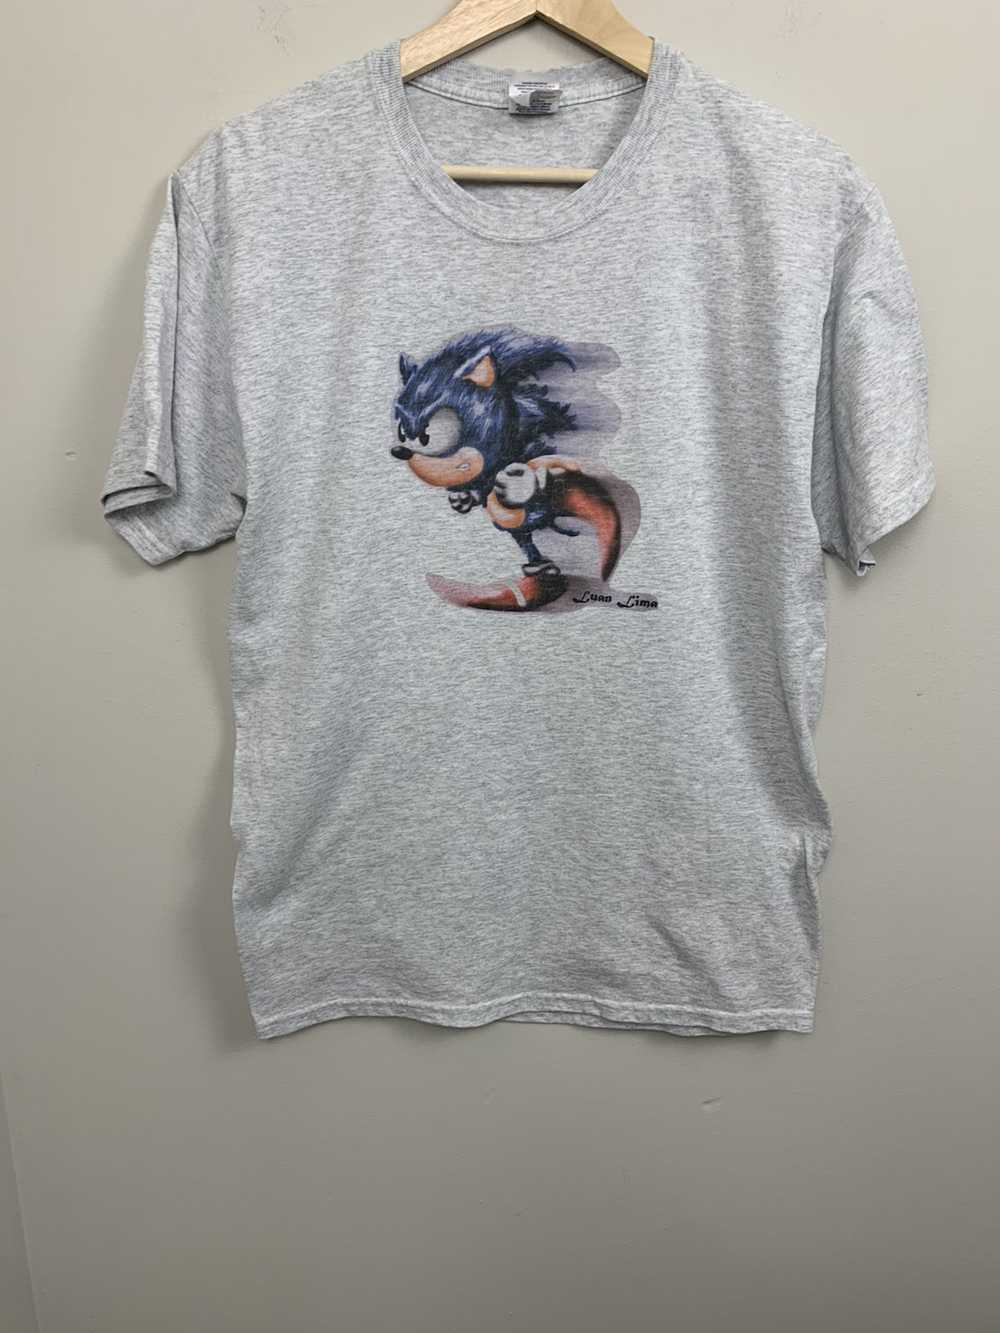 Vintage Sonic the Hedgehog T-Shirt - image 1